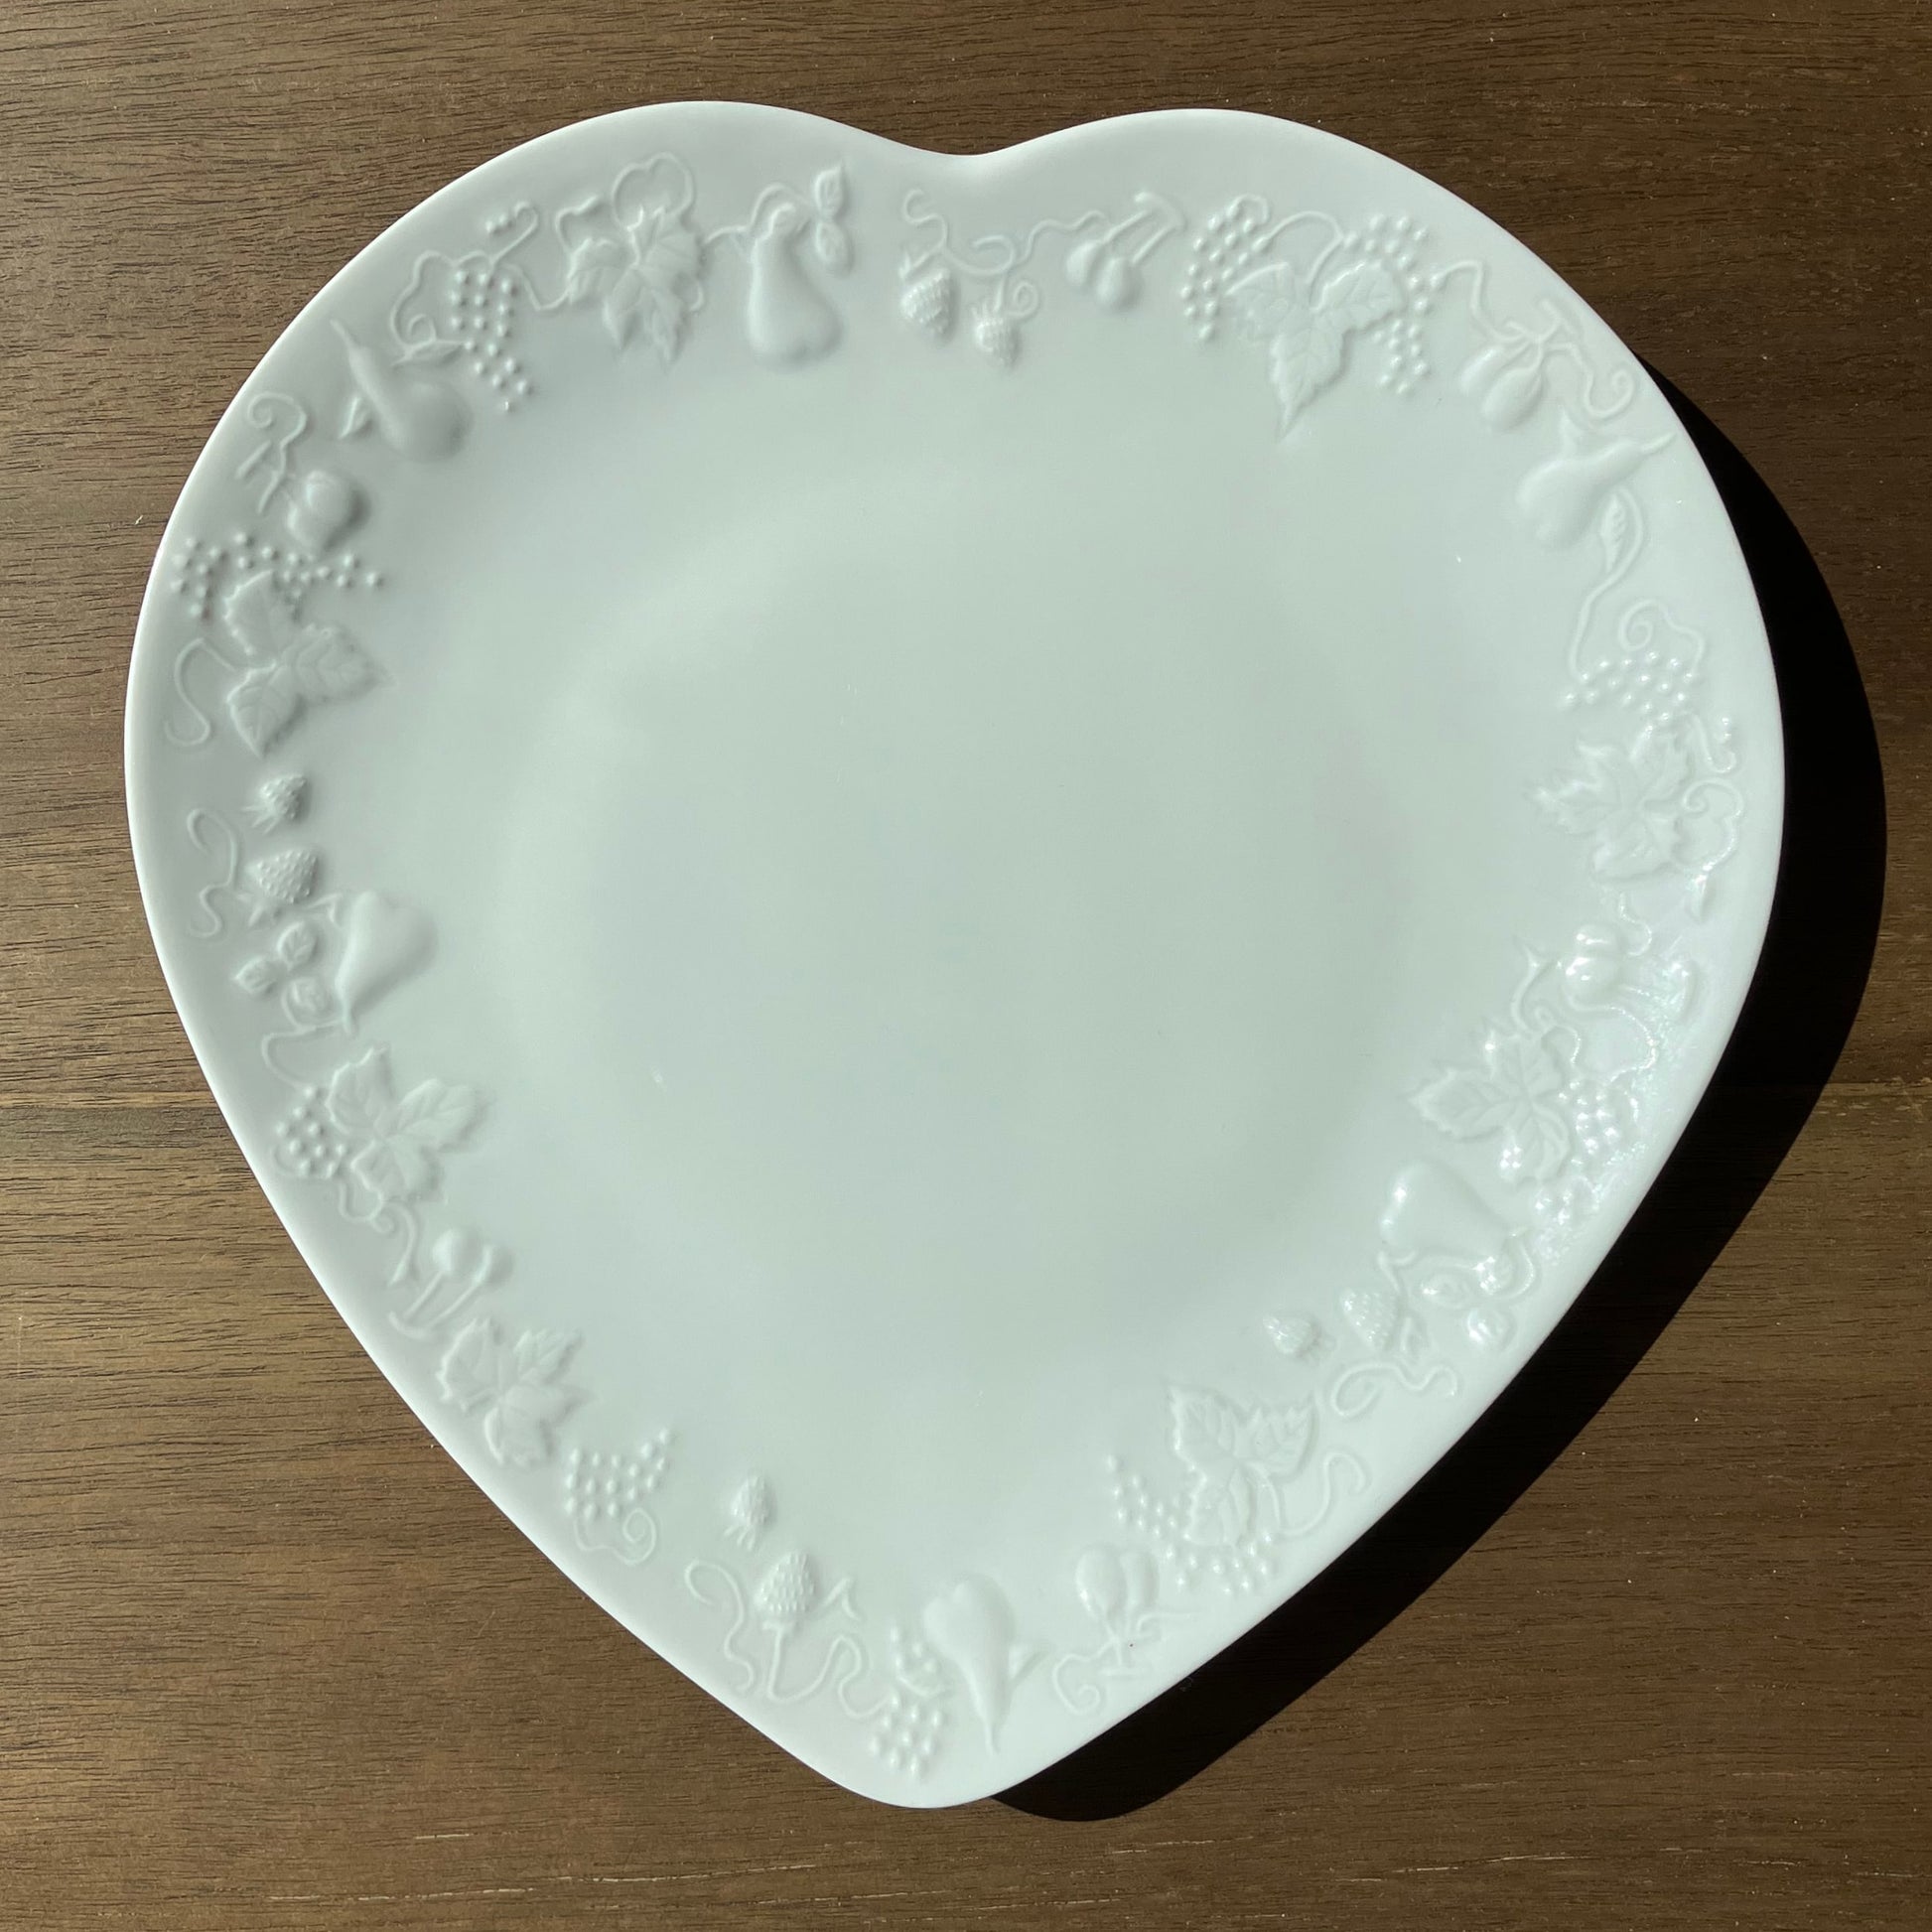 Vintage heart shaped platter - French Address